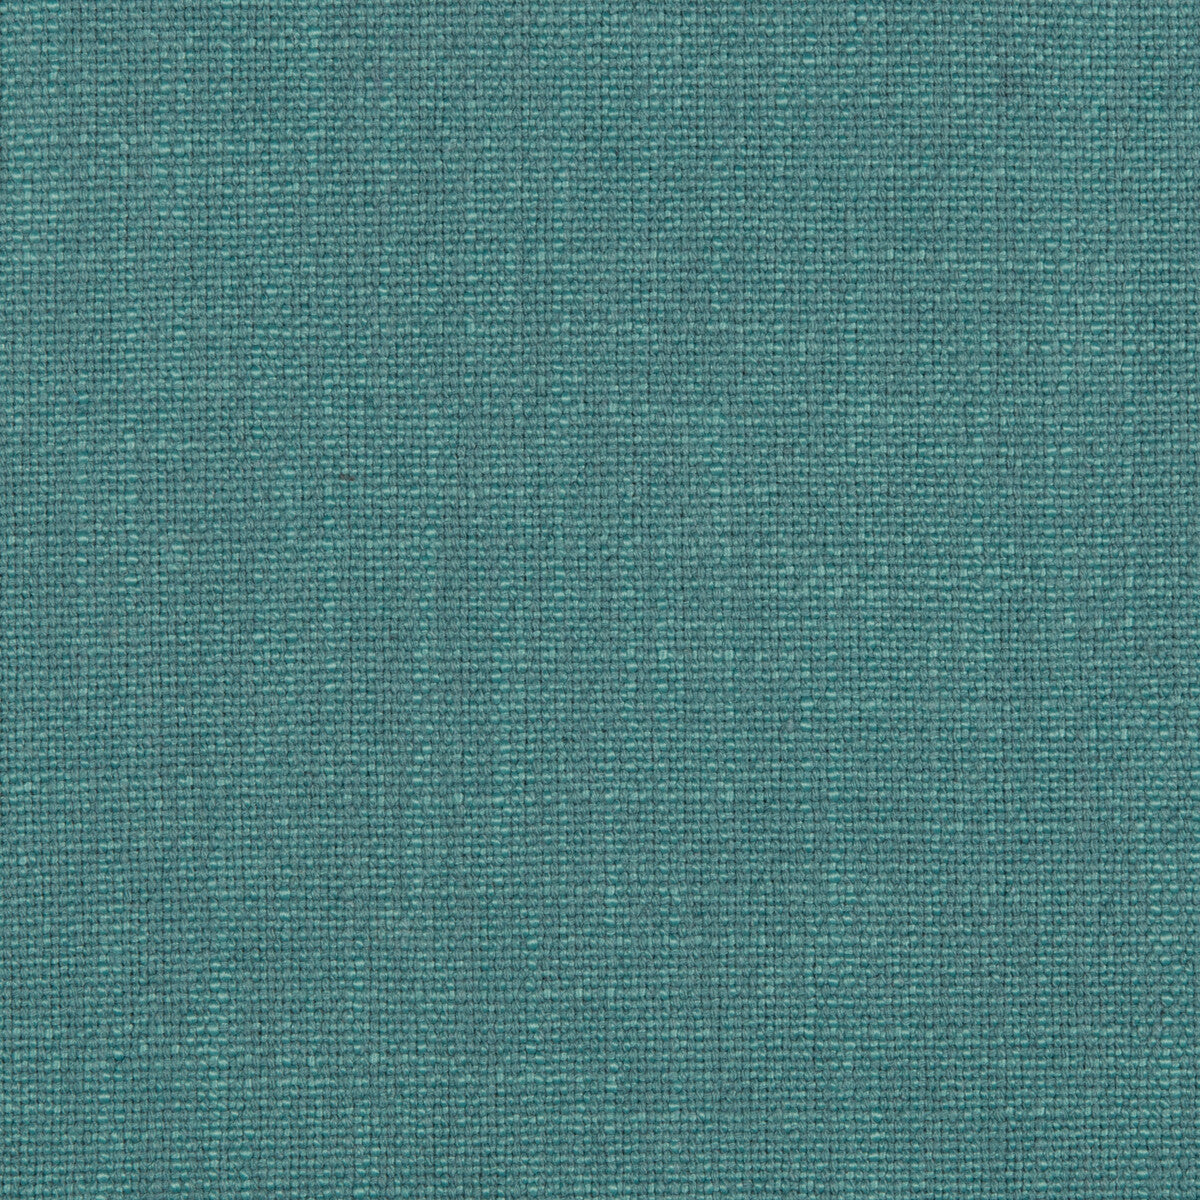 Kravet Smart fabric in 35226-35 color - pattern 35226.35.0 - by Kravet Smart in the Performance Kravetarmor collection